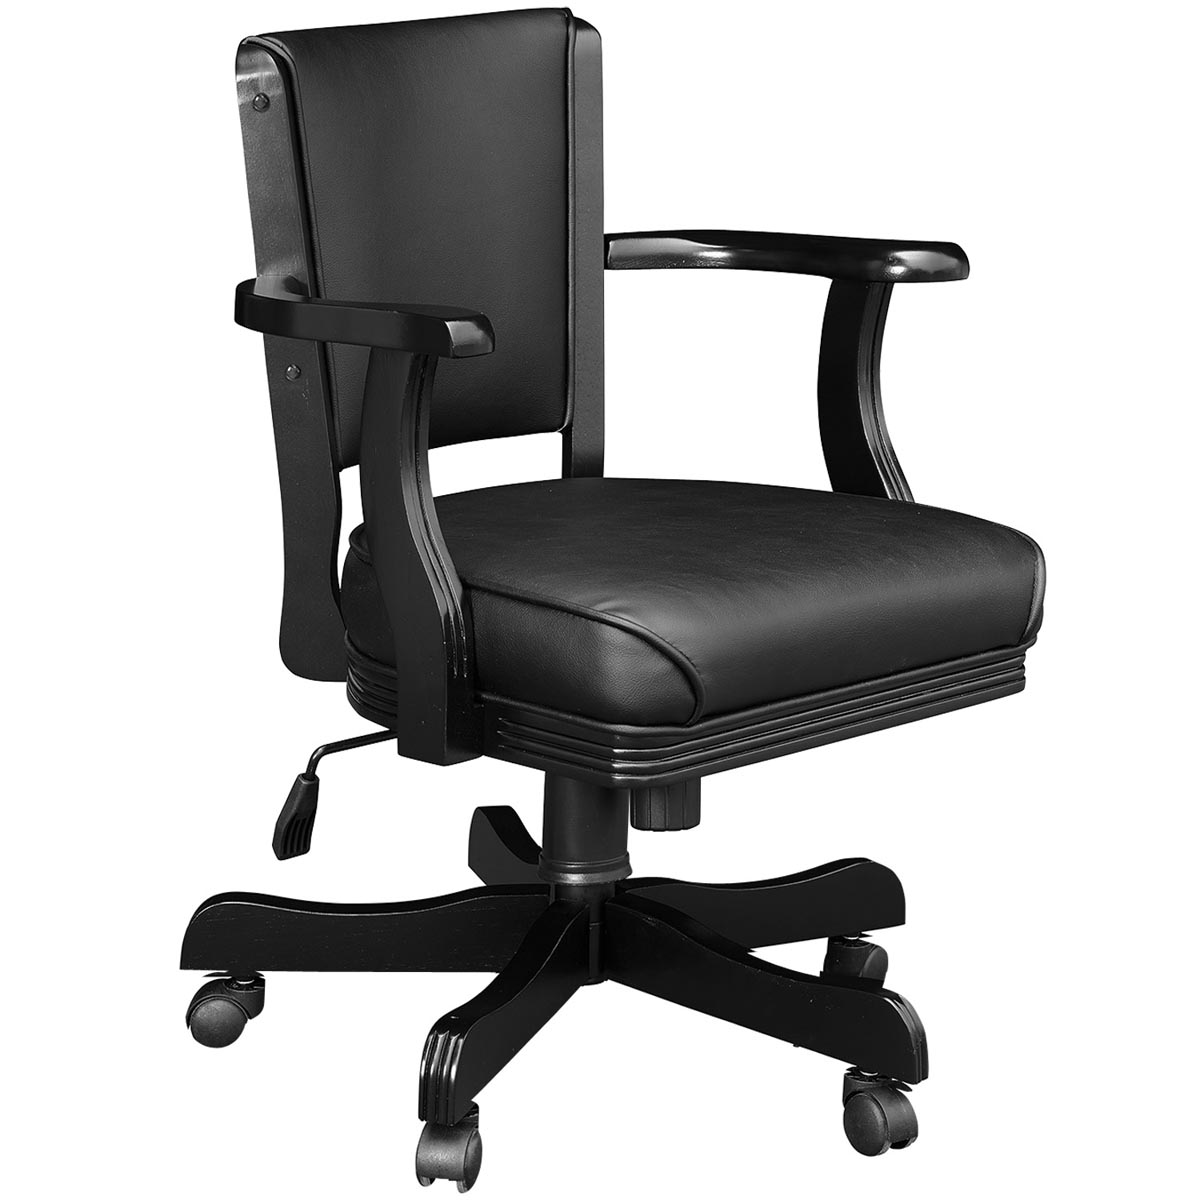 Optional Black Swivel Chair